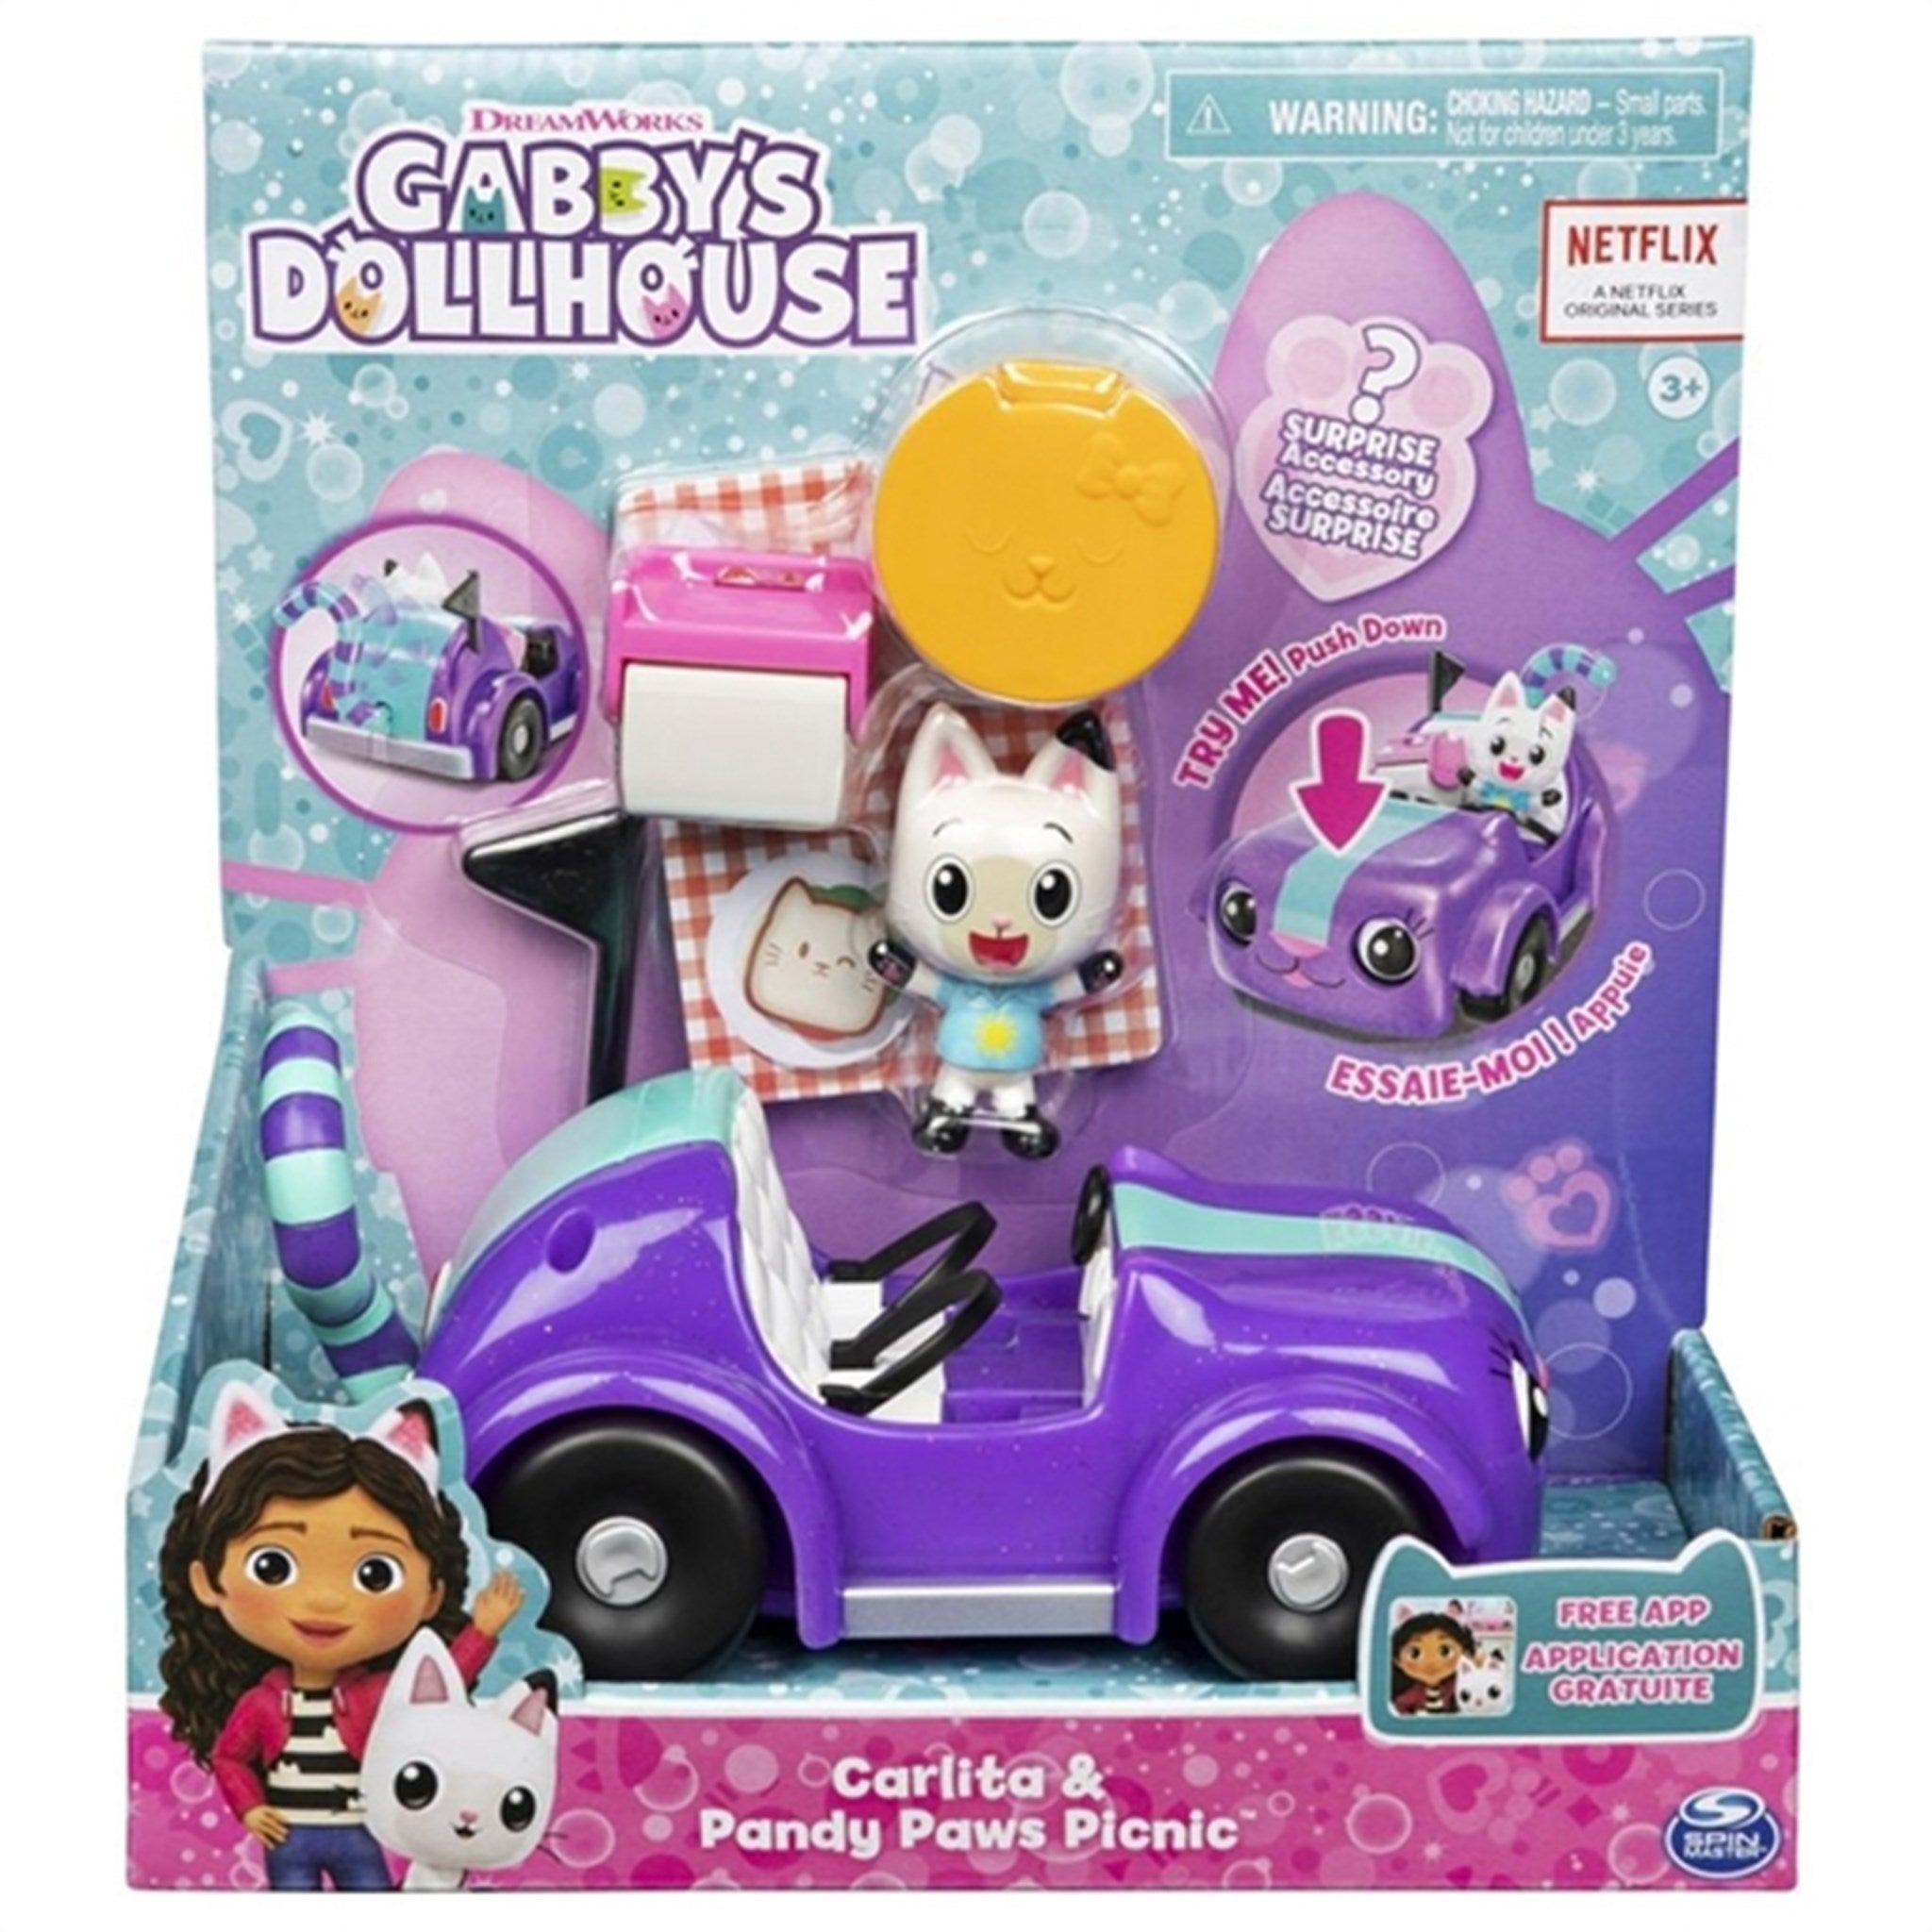 Gabby's Dollhouse - Carlita & Pandy Paws Picnic 5